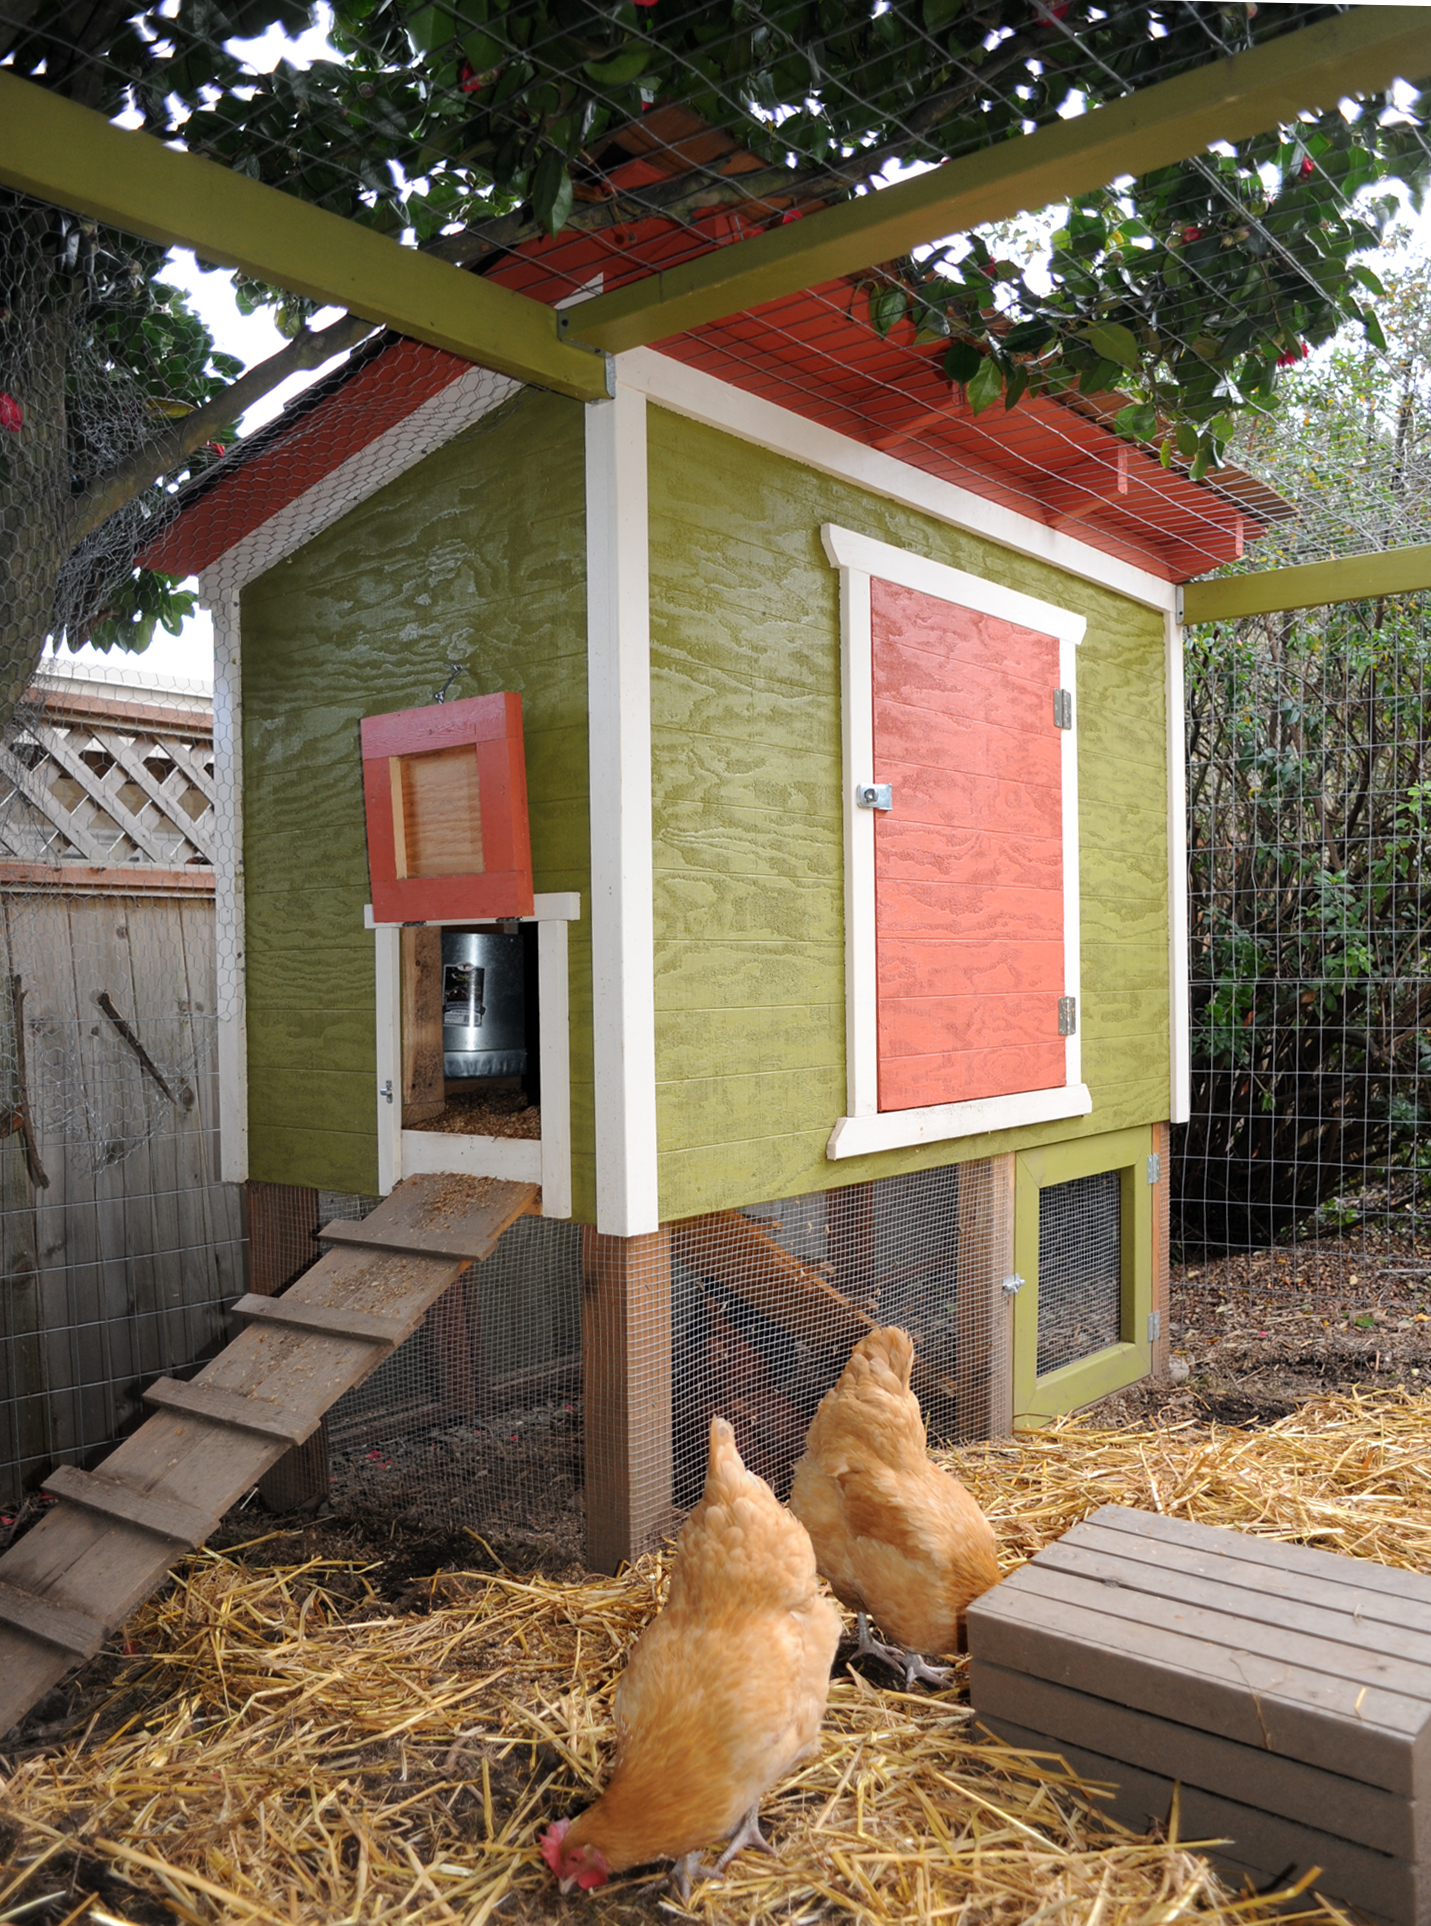 Description Seattle Chicken Coop and 2 Hens.jpg